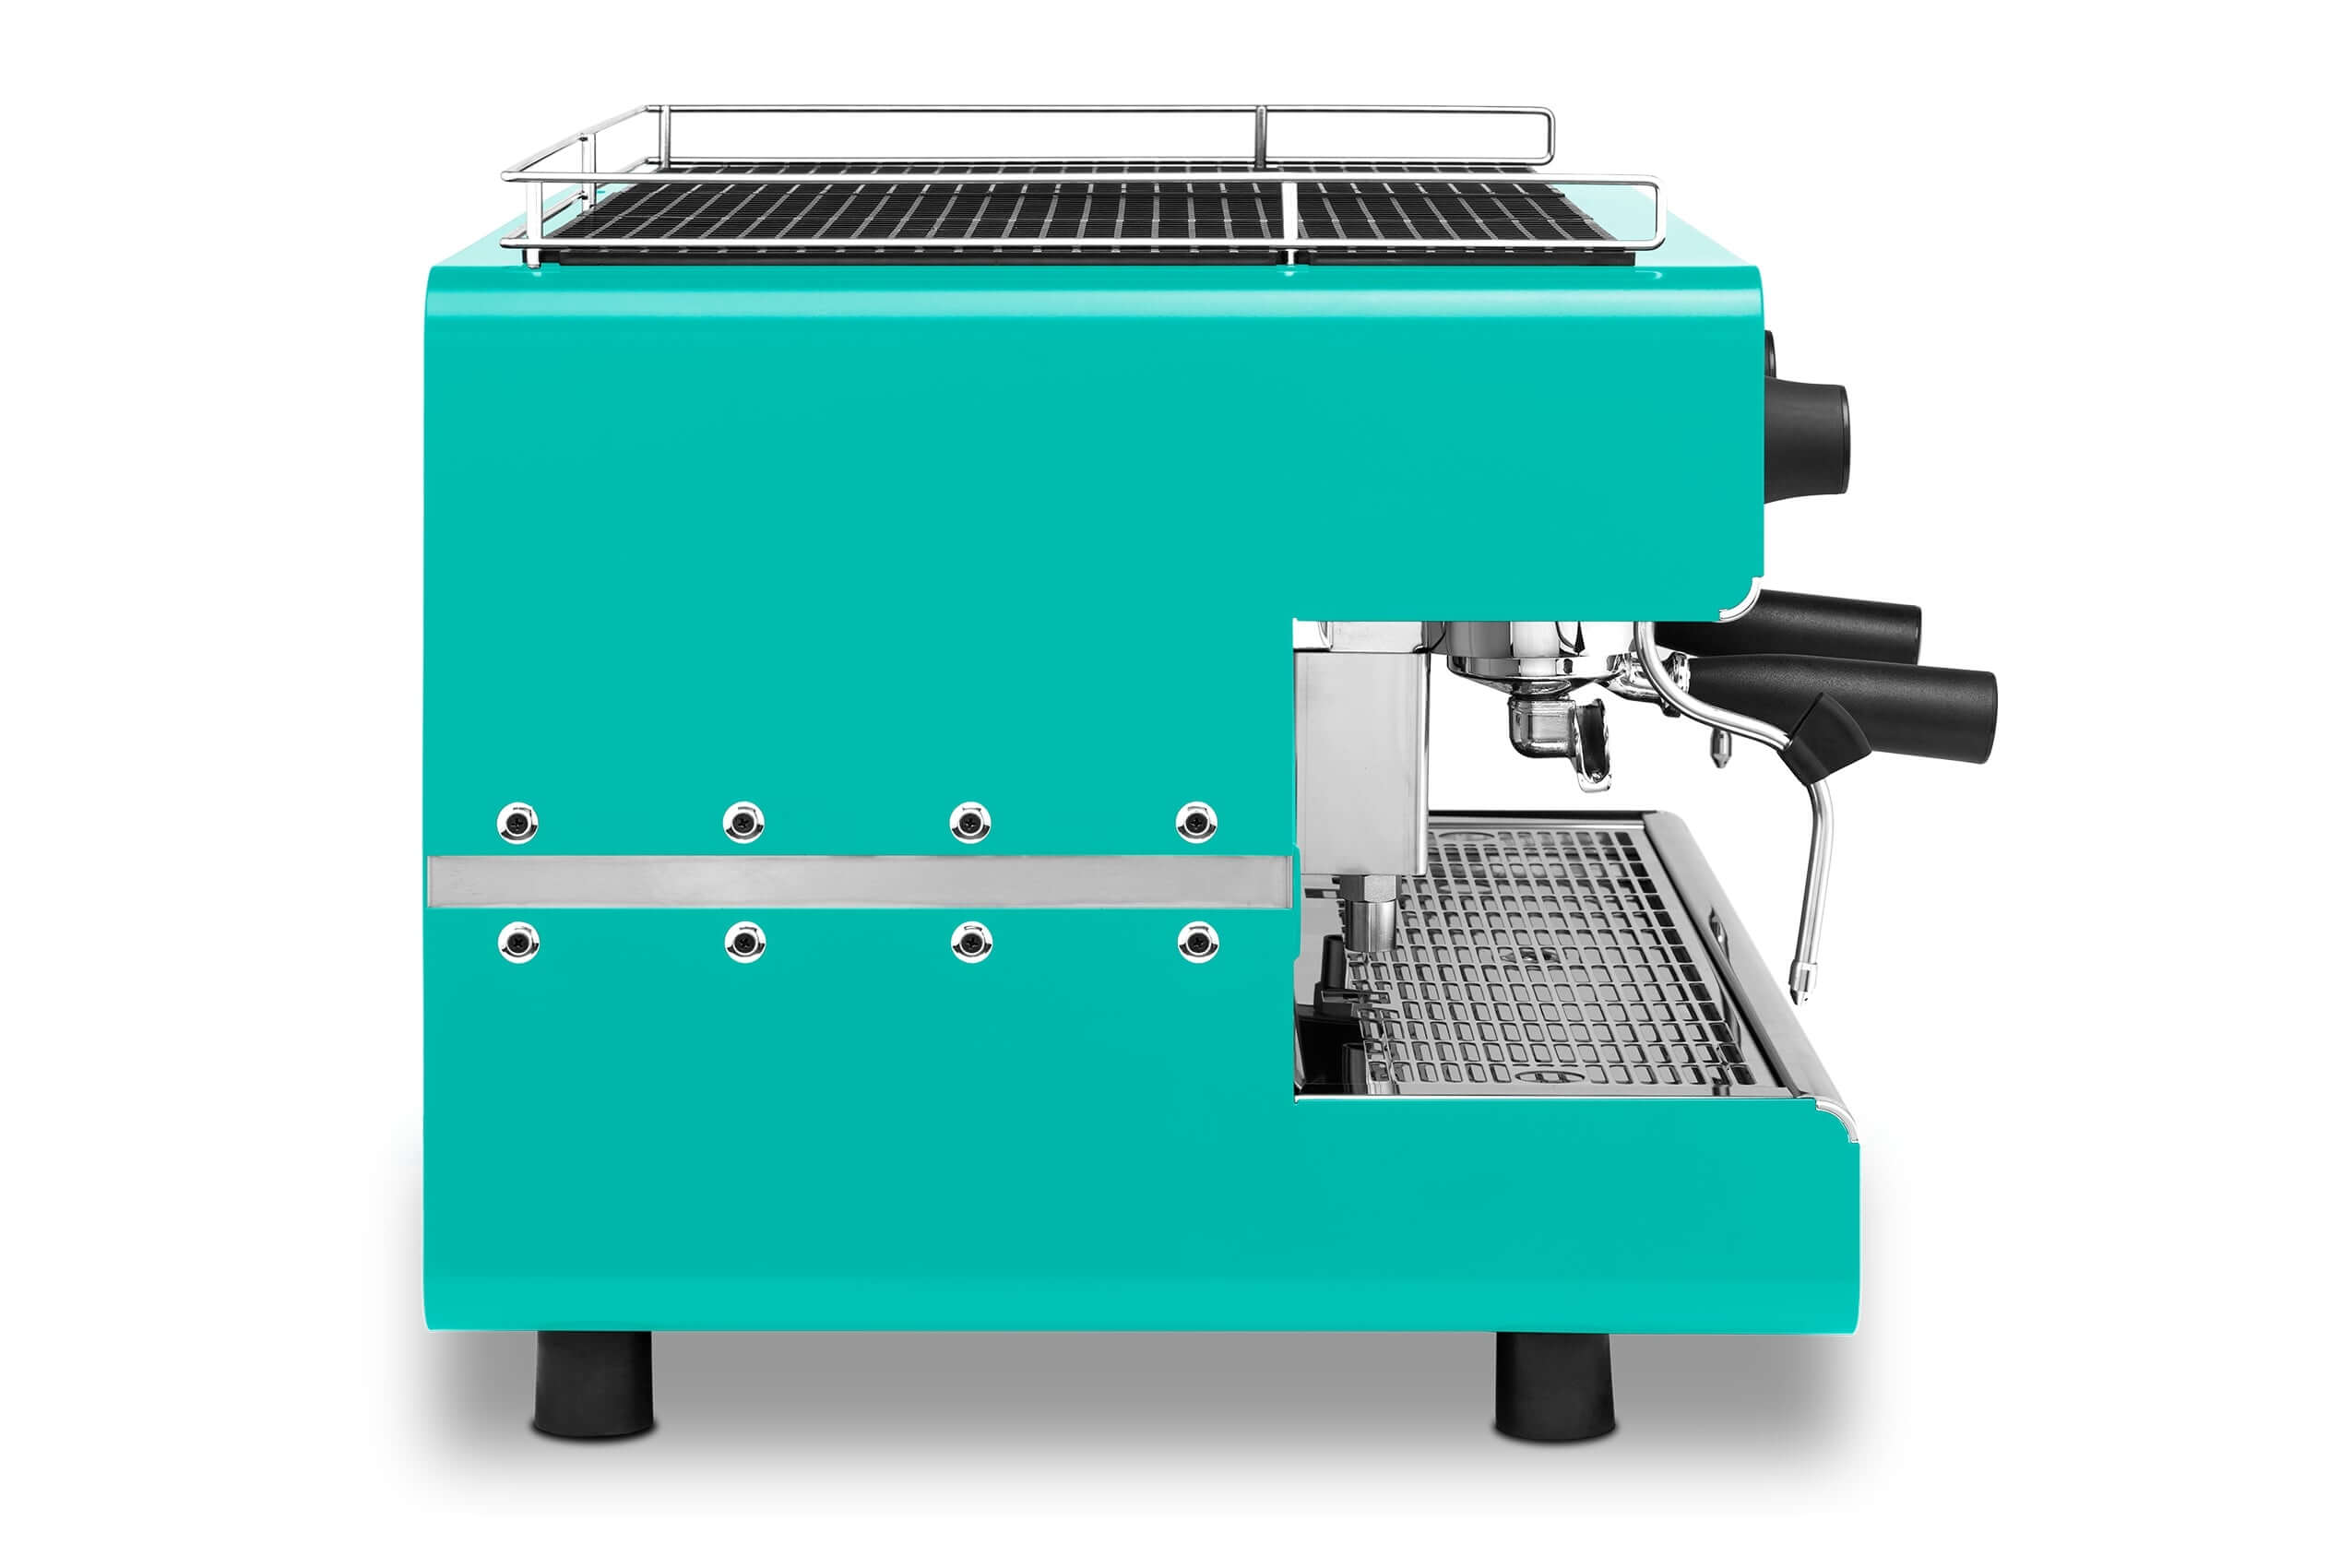 Iberital IB7 3 Group Traditional Espresso Coffee Machine